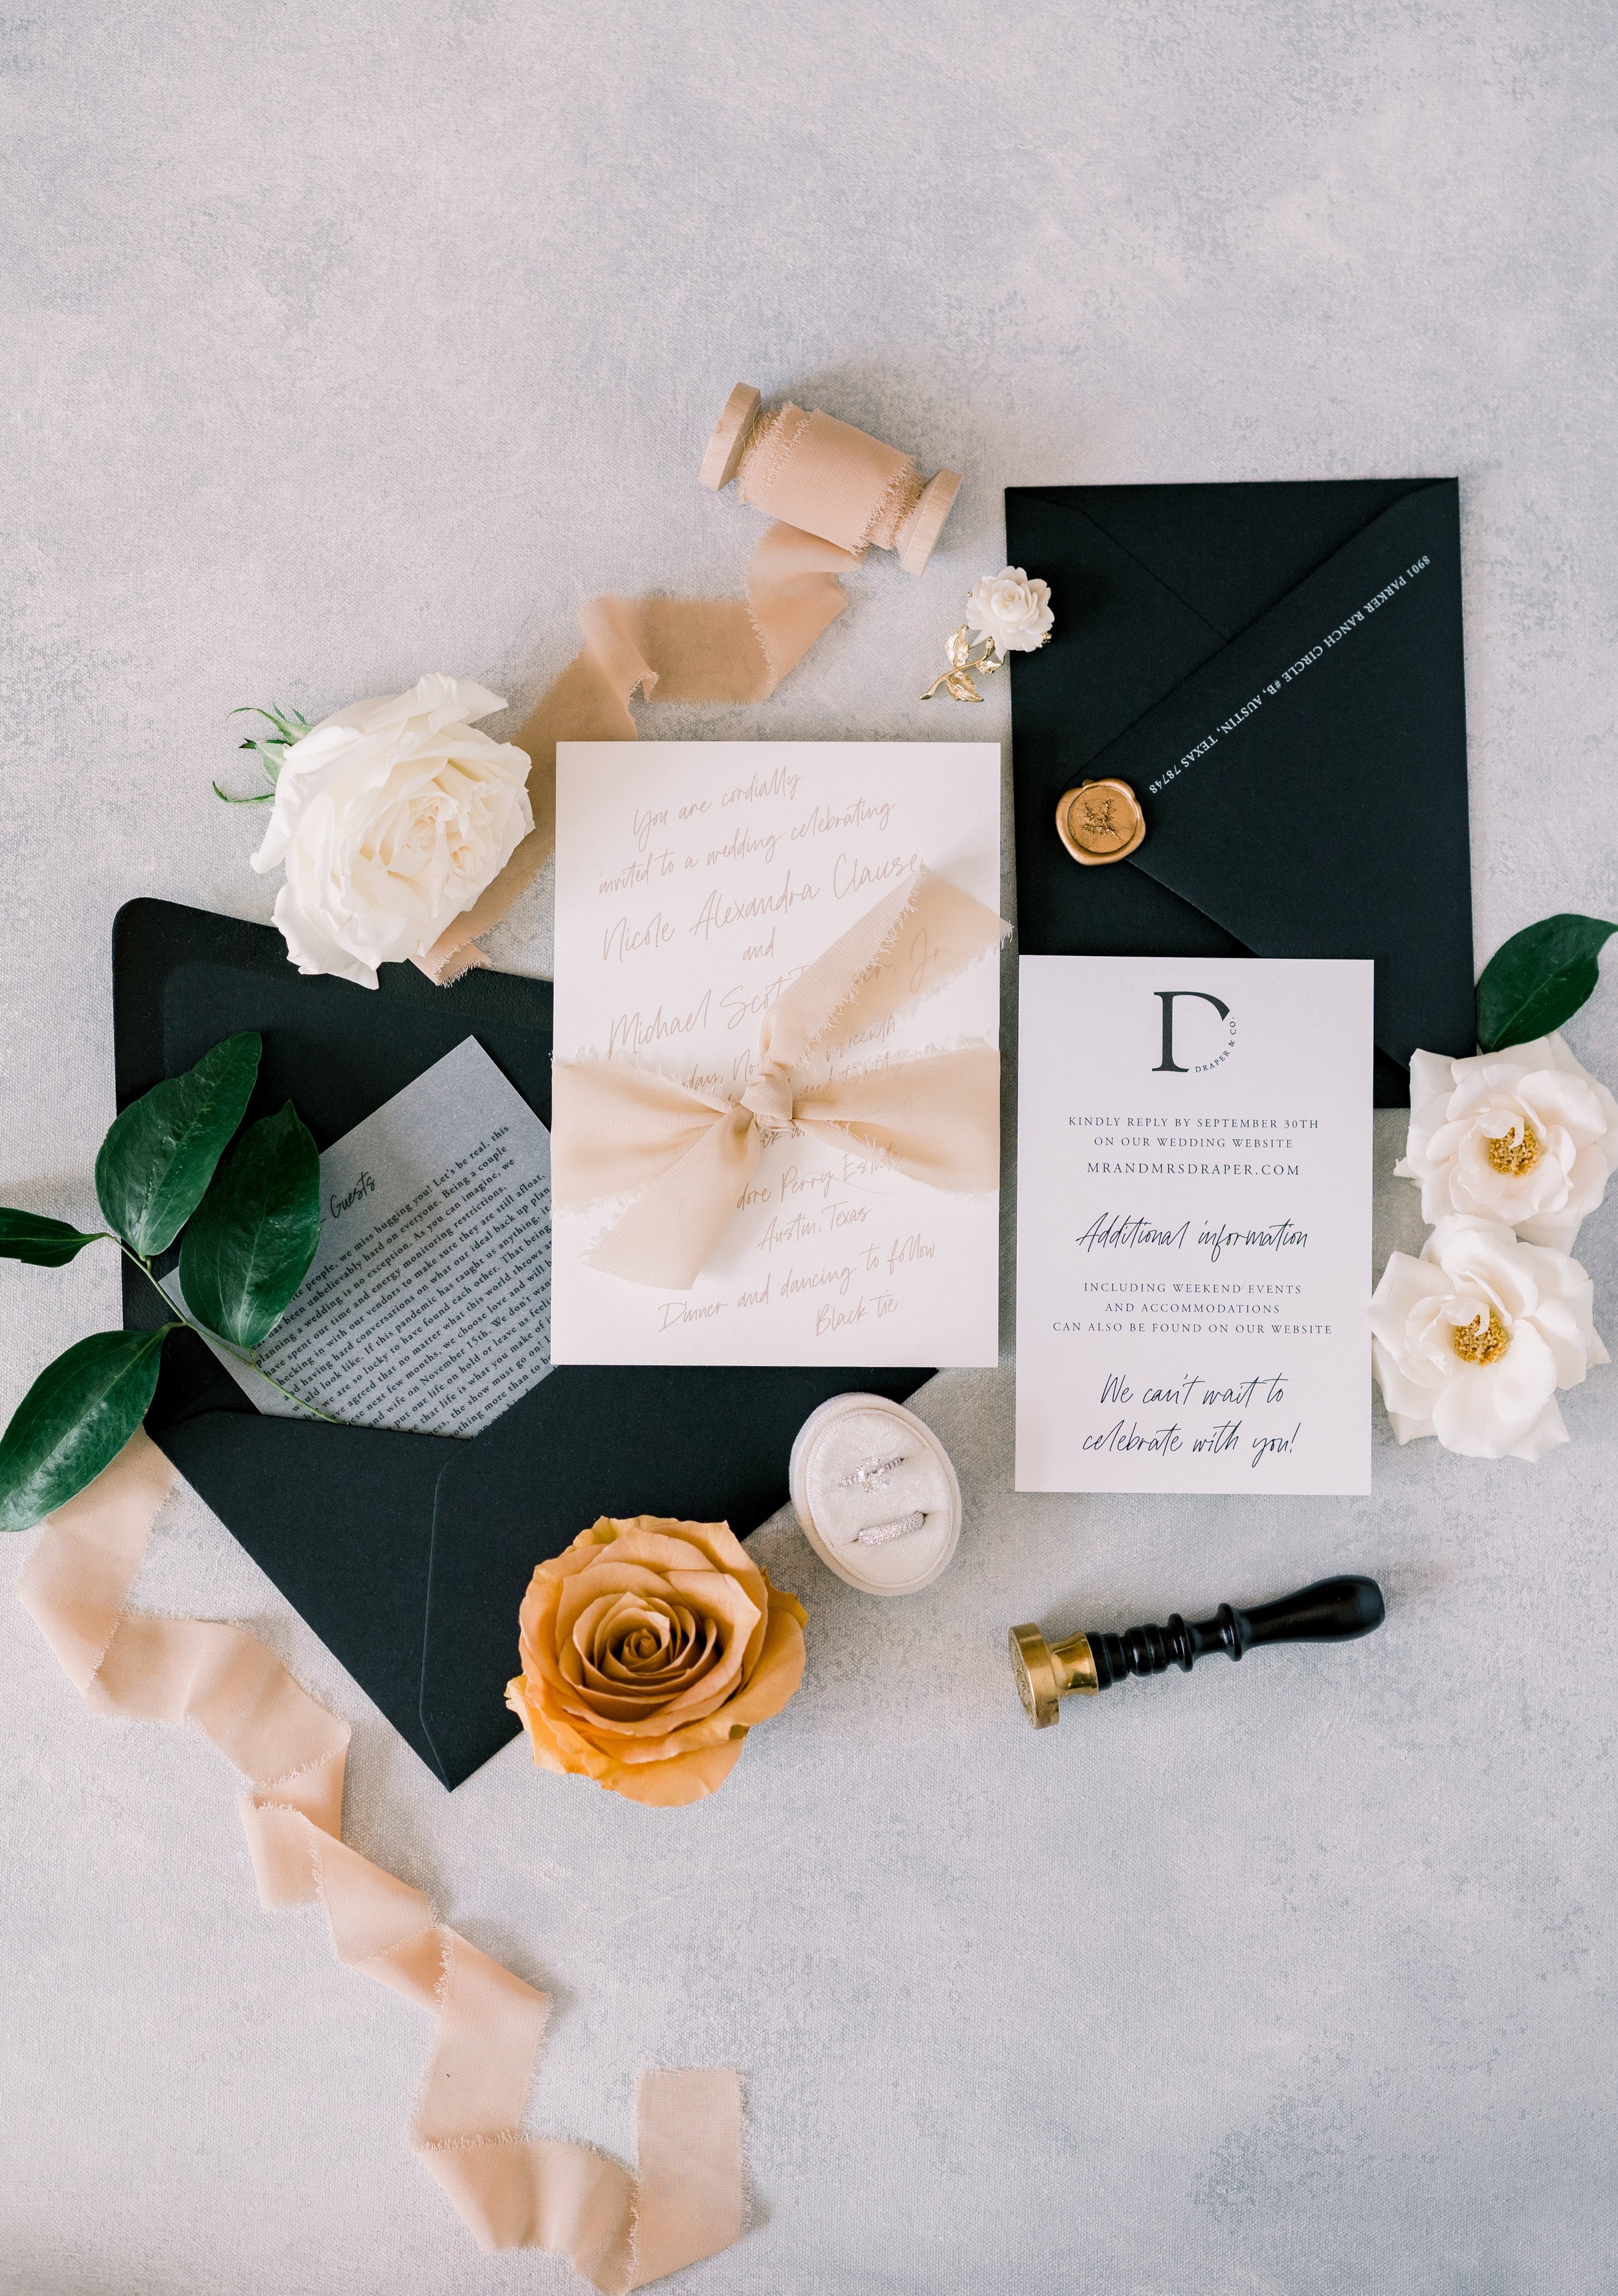 Pink-Champagne-Designs-Modern-and-elegant-wedding-invitations